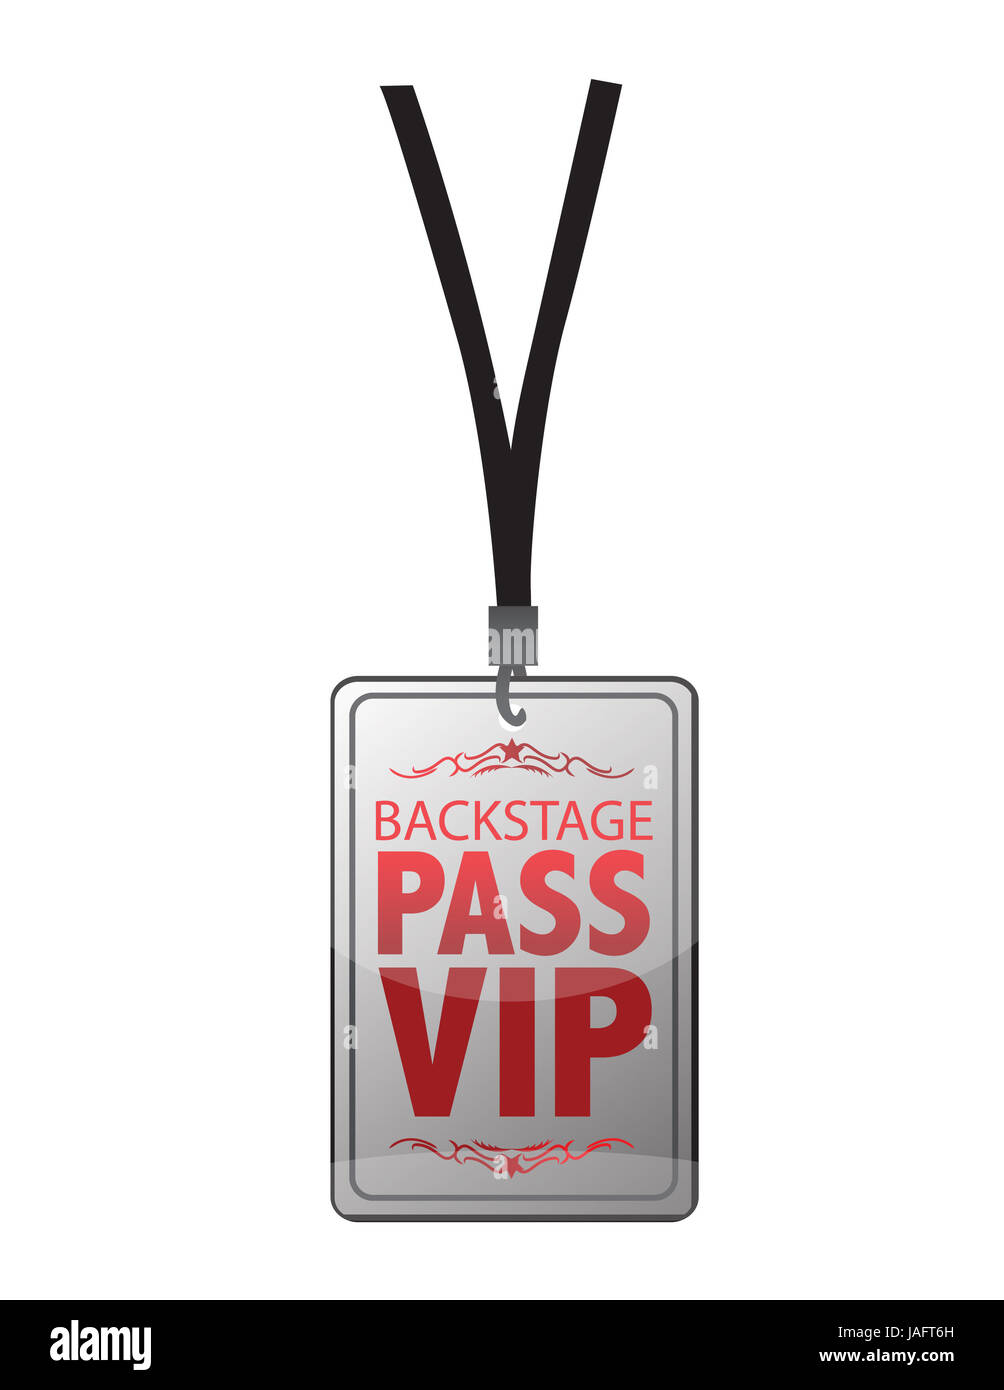 Backstage Pass Vip Stock Photo Alamy